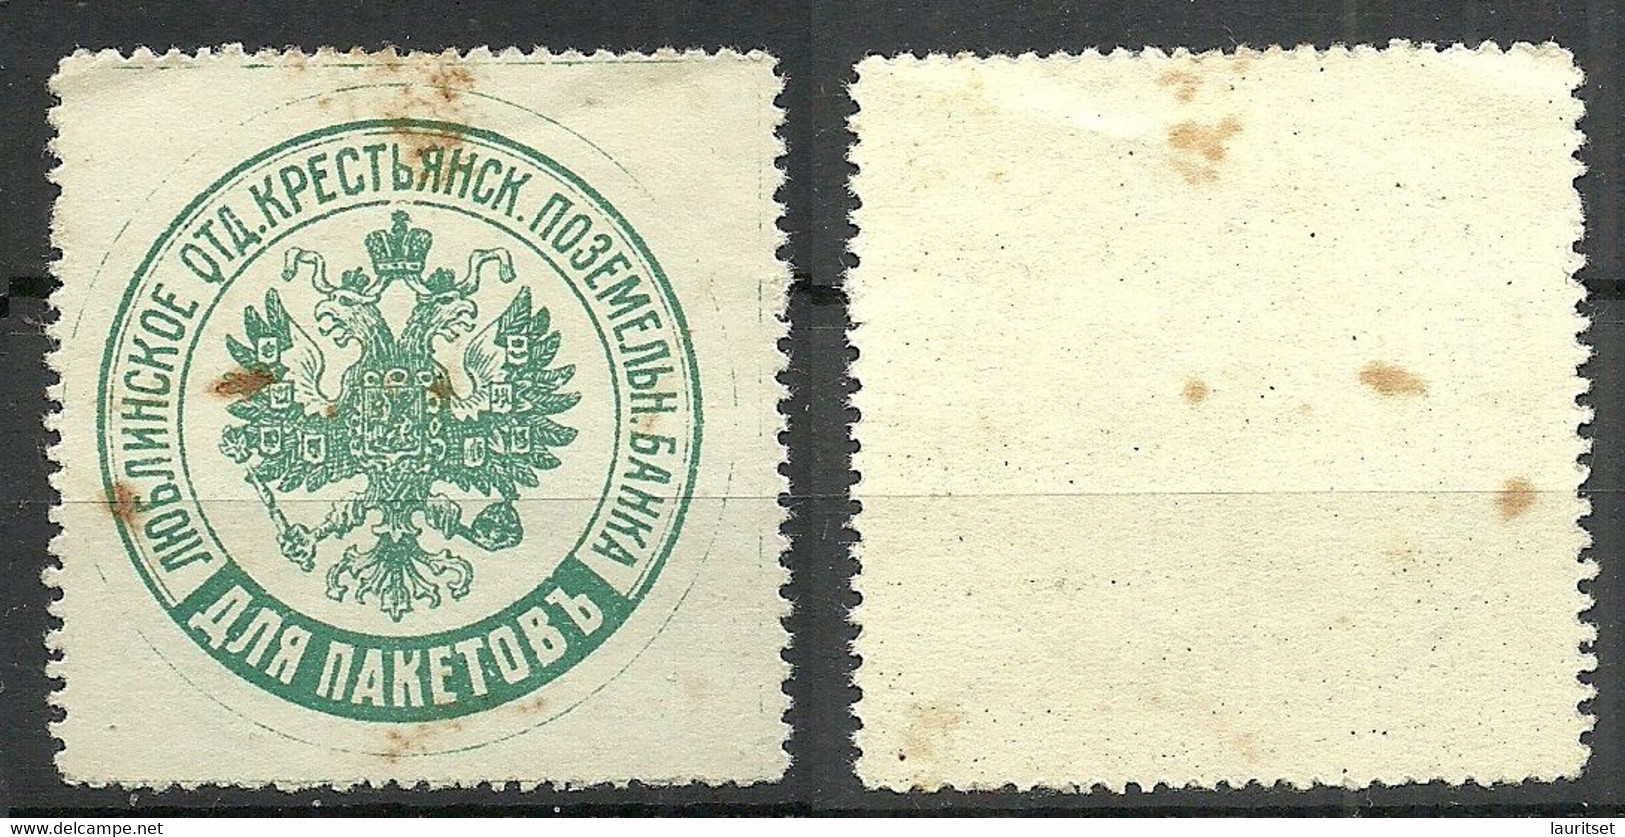 Imperial RUSSLAND RUSSIA Packet Stamp Paketenmarke Original Gum MNH Lublin Bank Poland NB! Rusty Spots! Stockfleckig! - Variétés & Curiosités